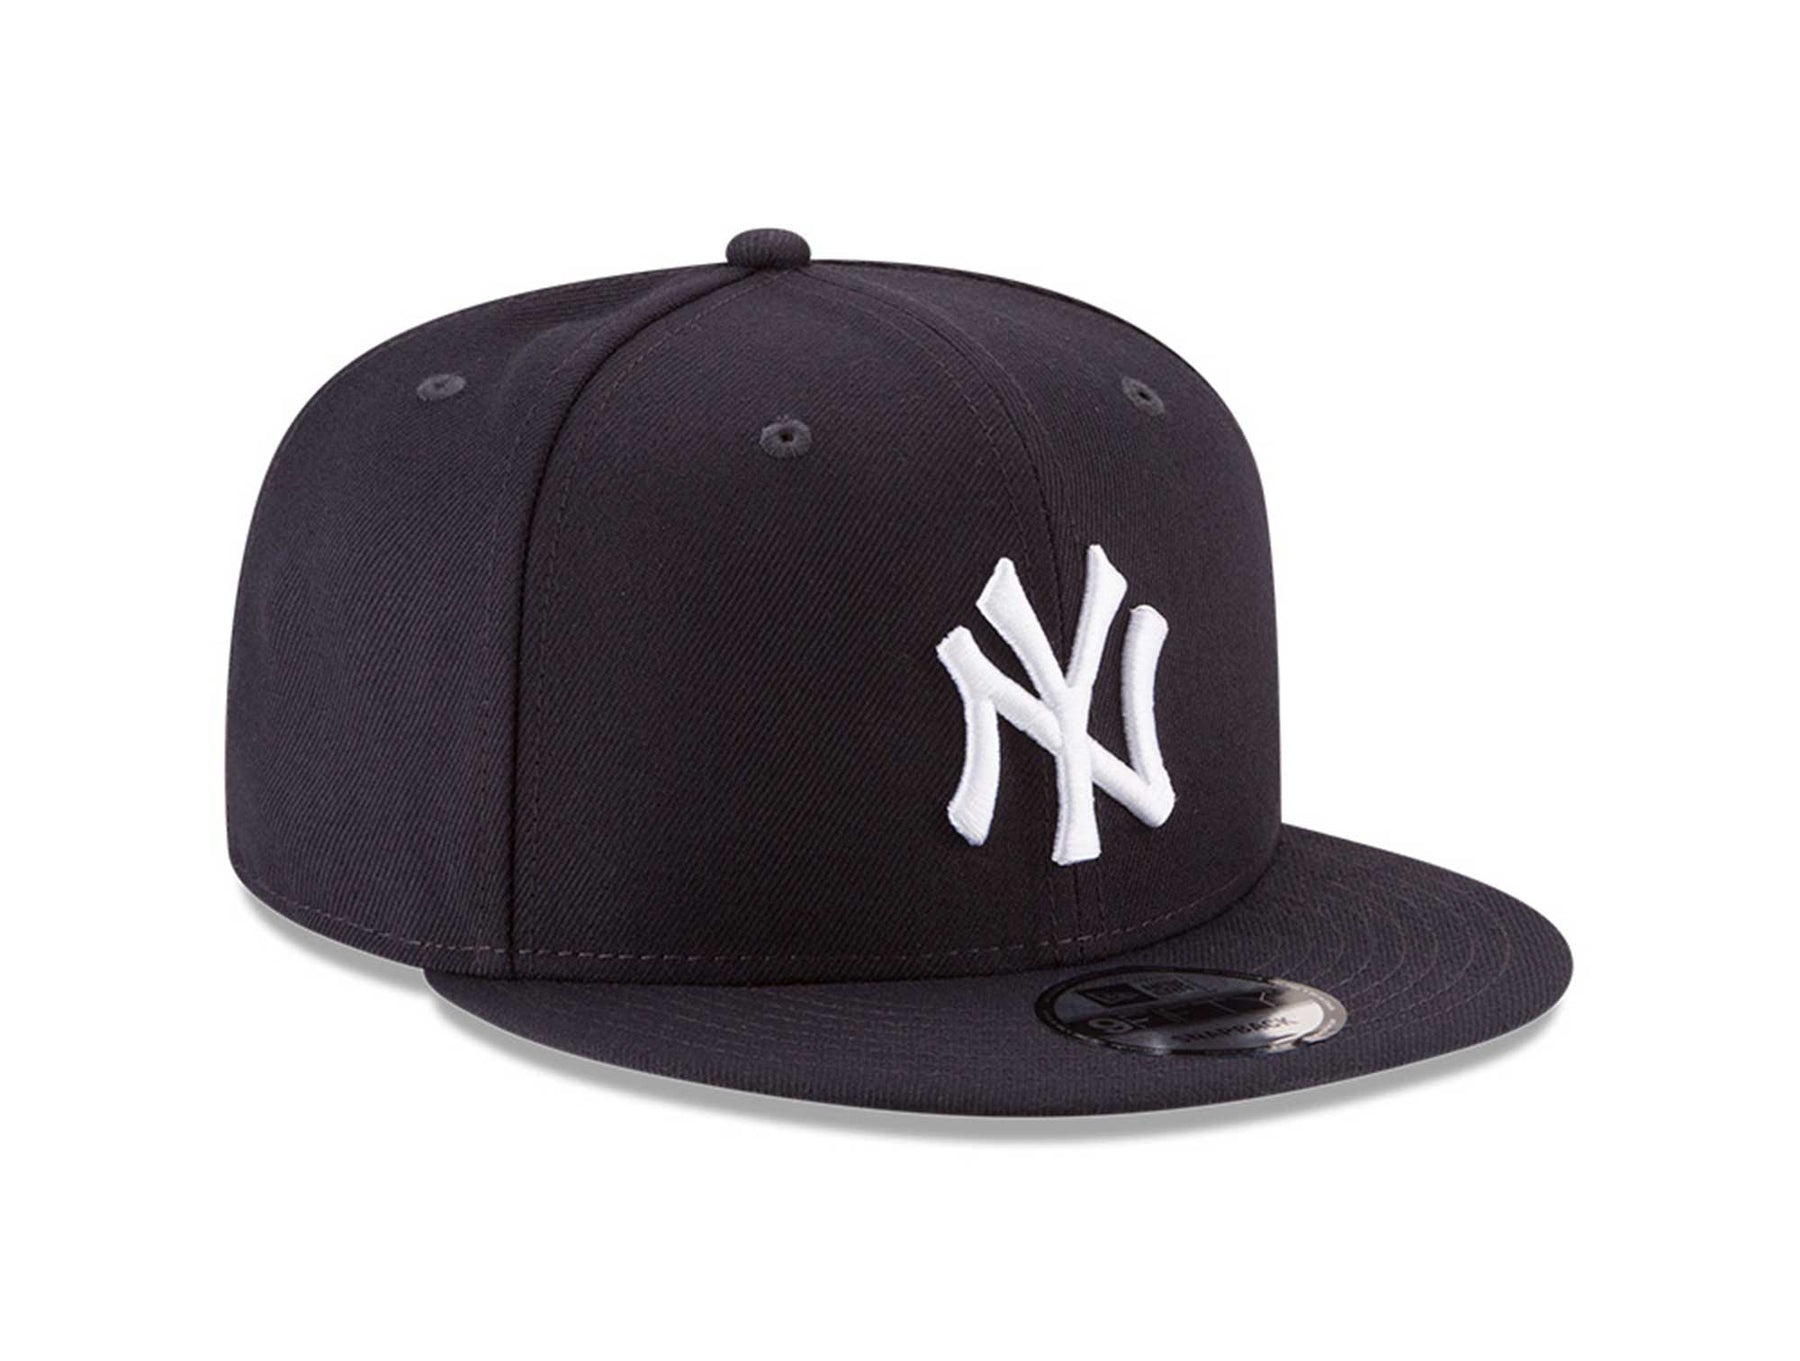 Gorra de béisbol MLB Hombre / Mujer - New York Yankees Gris